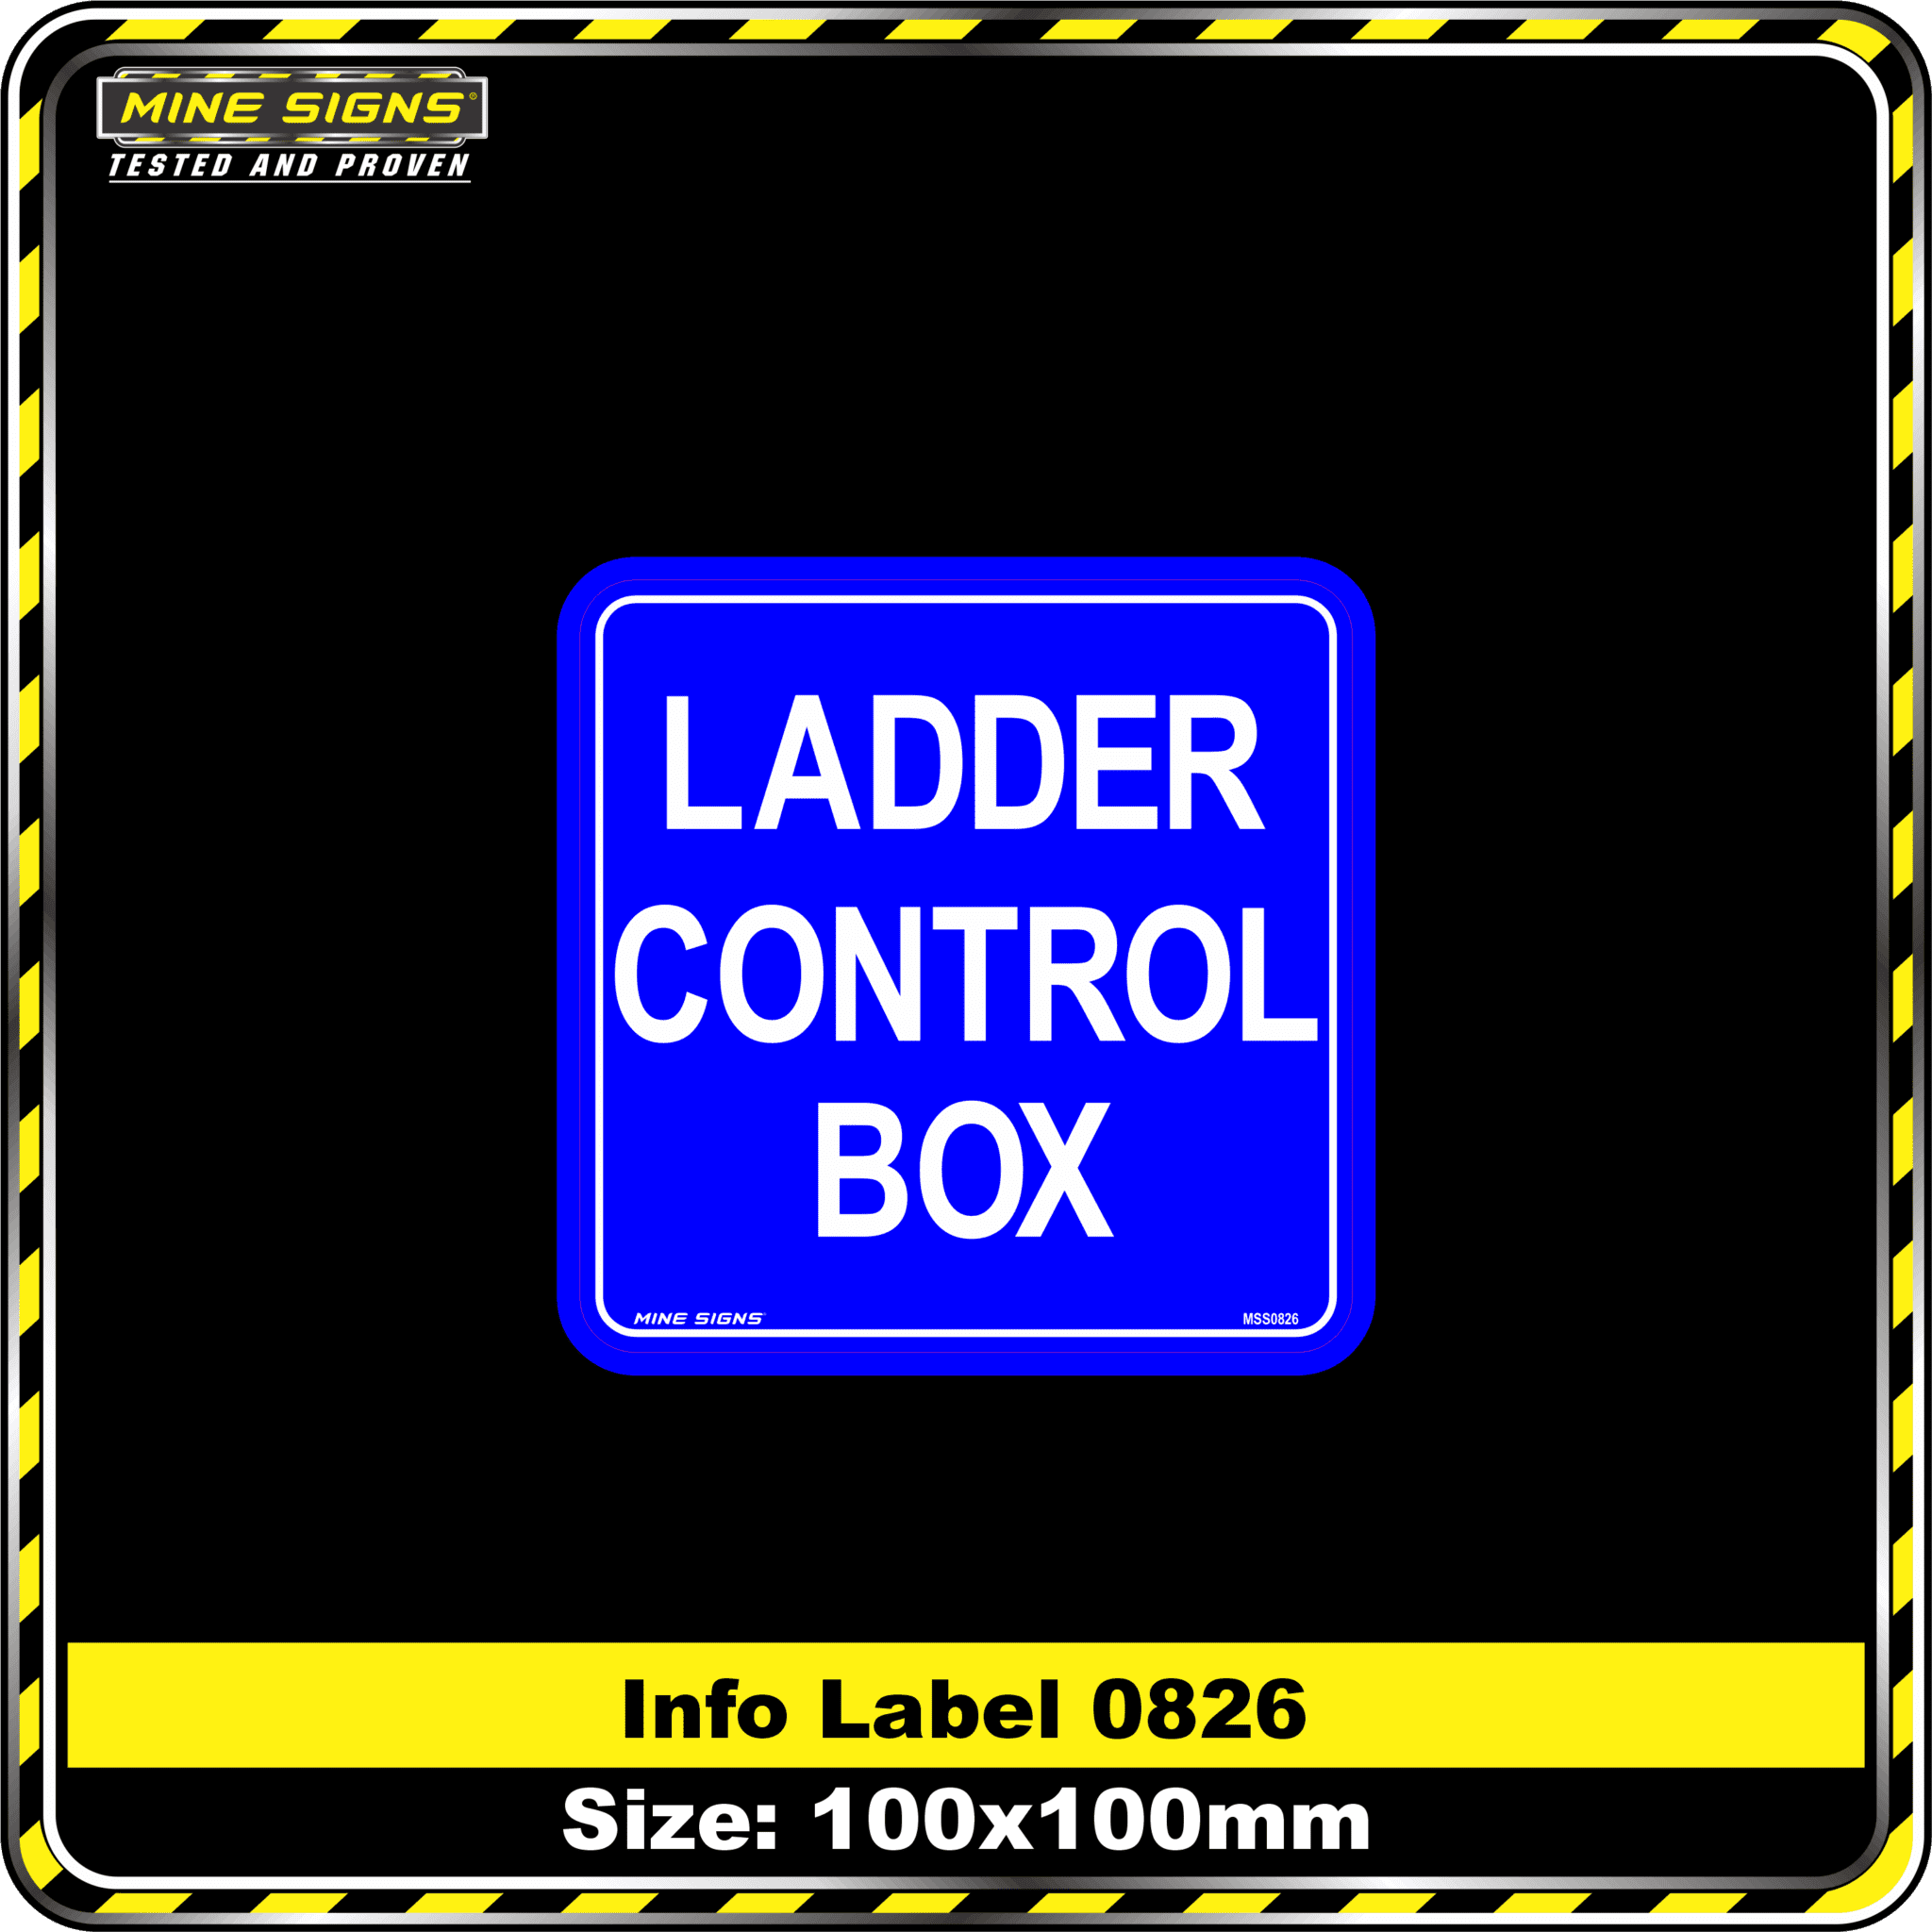 Ladder Control Box